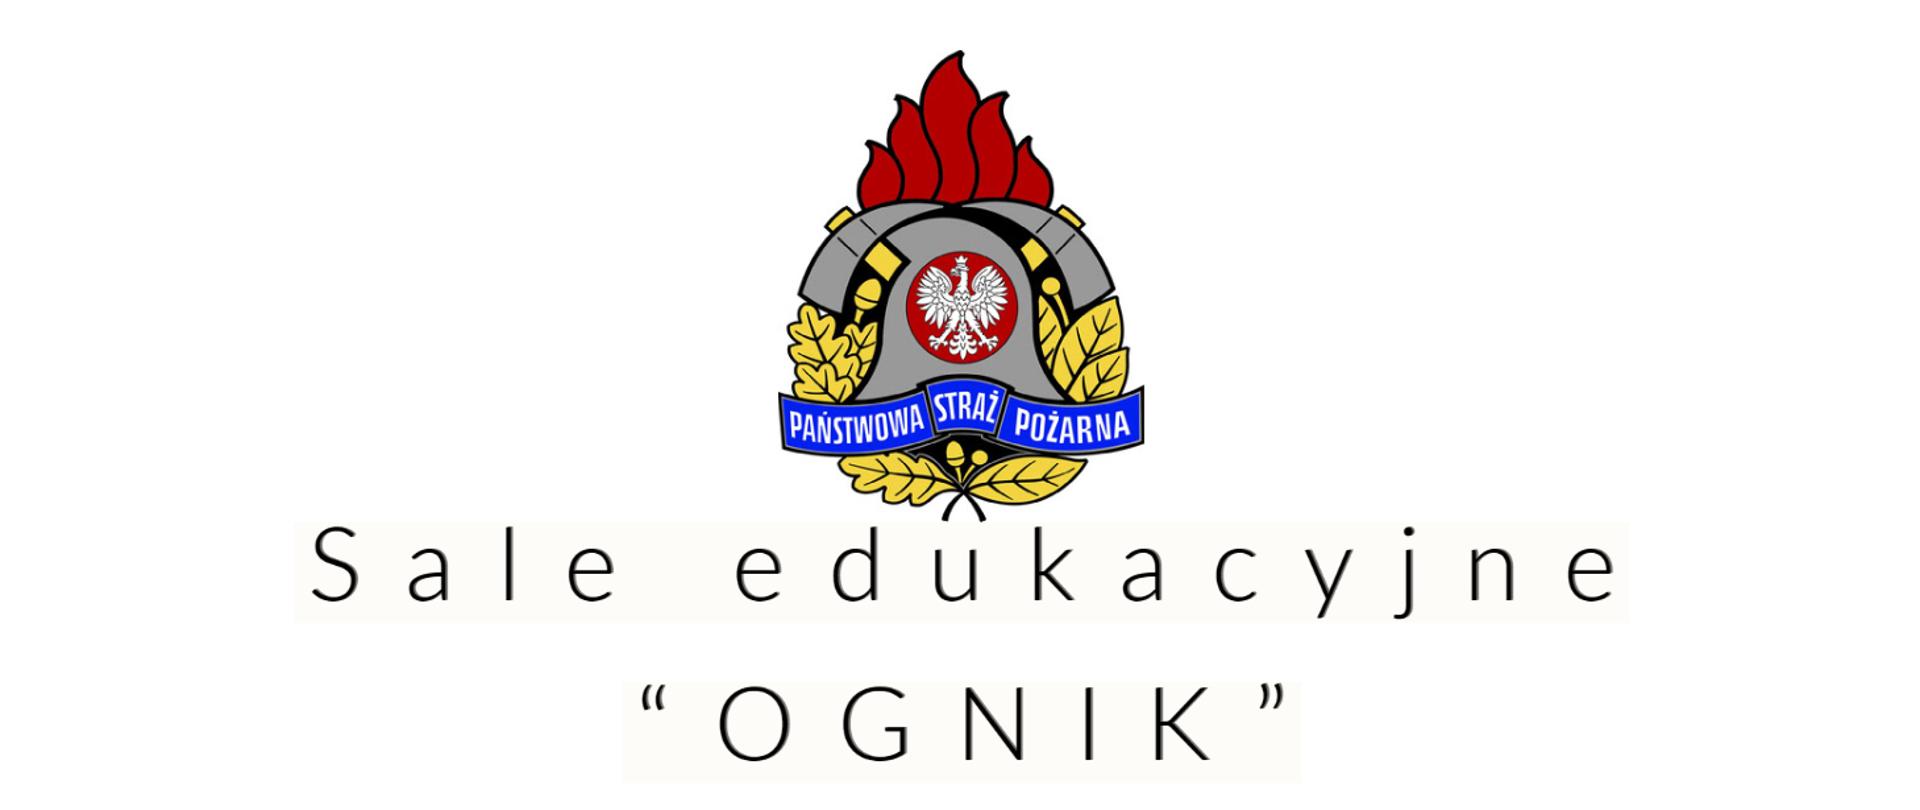 Sale edukacyjne "OGNIK" grafika w tle z logo PSP 